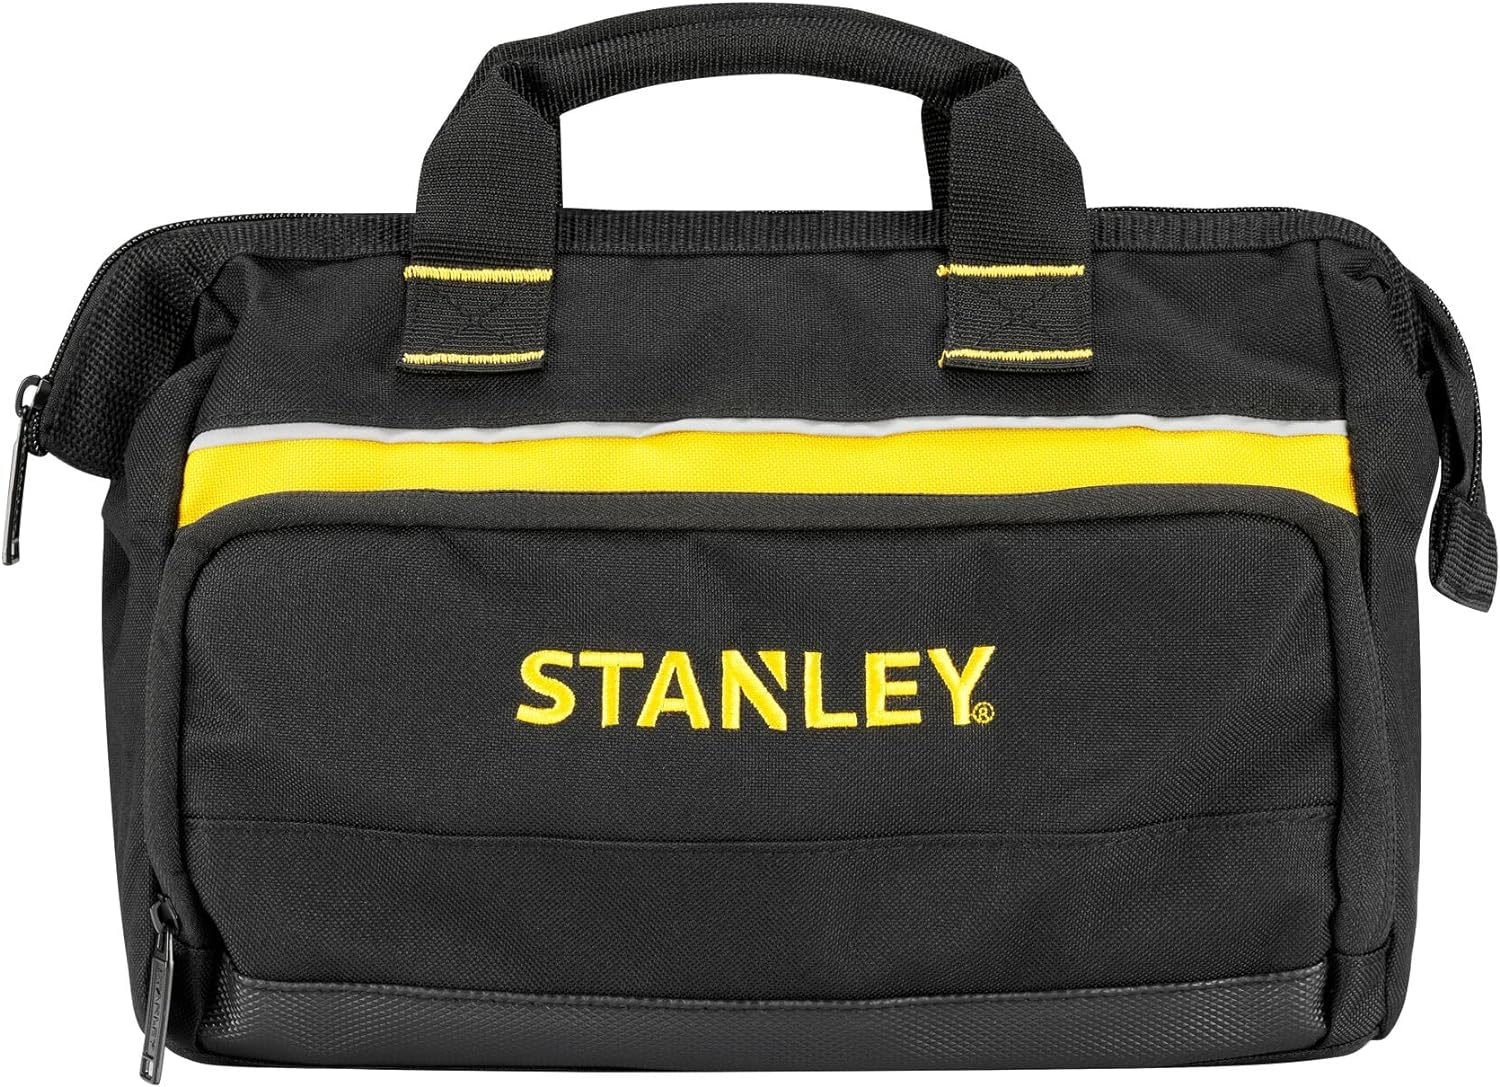 STANLEY Tool Bag 30 x 25 x 13 cm in Resistant 600 x 600 Denier 3301